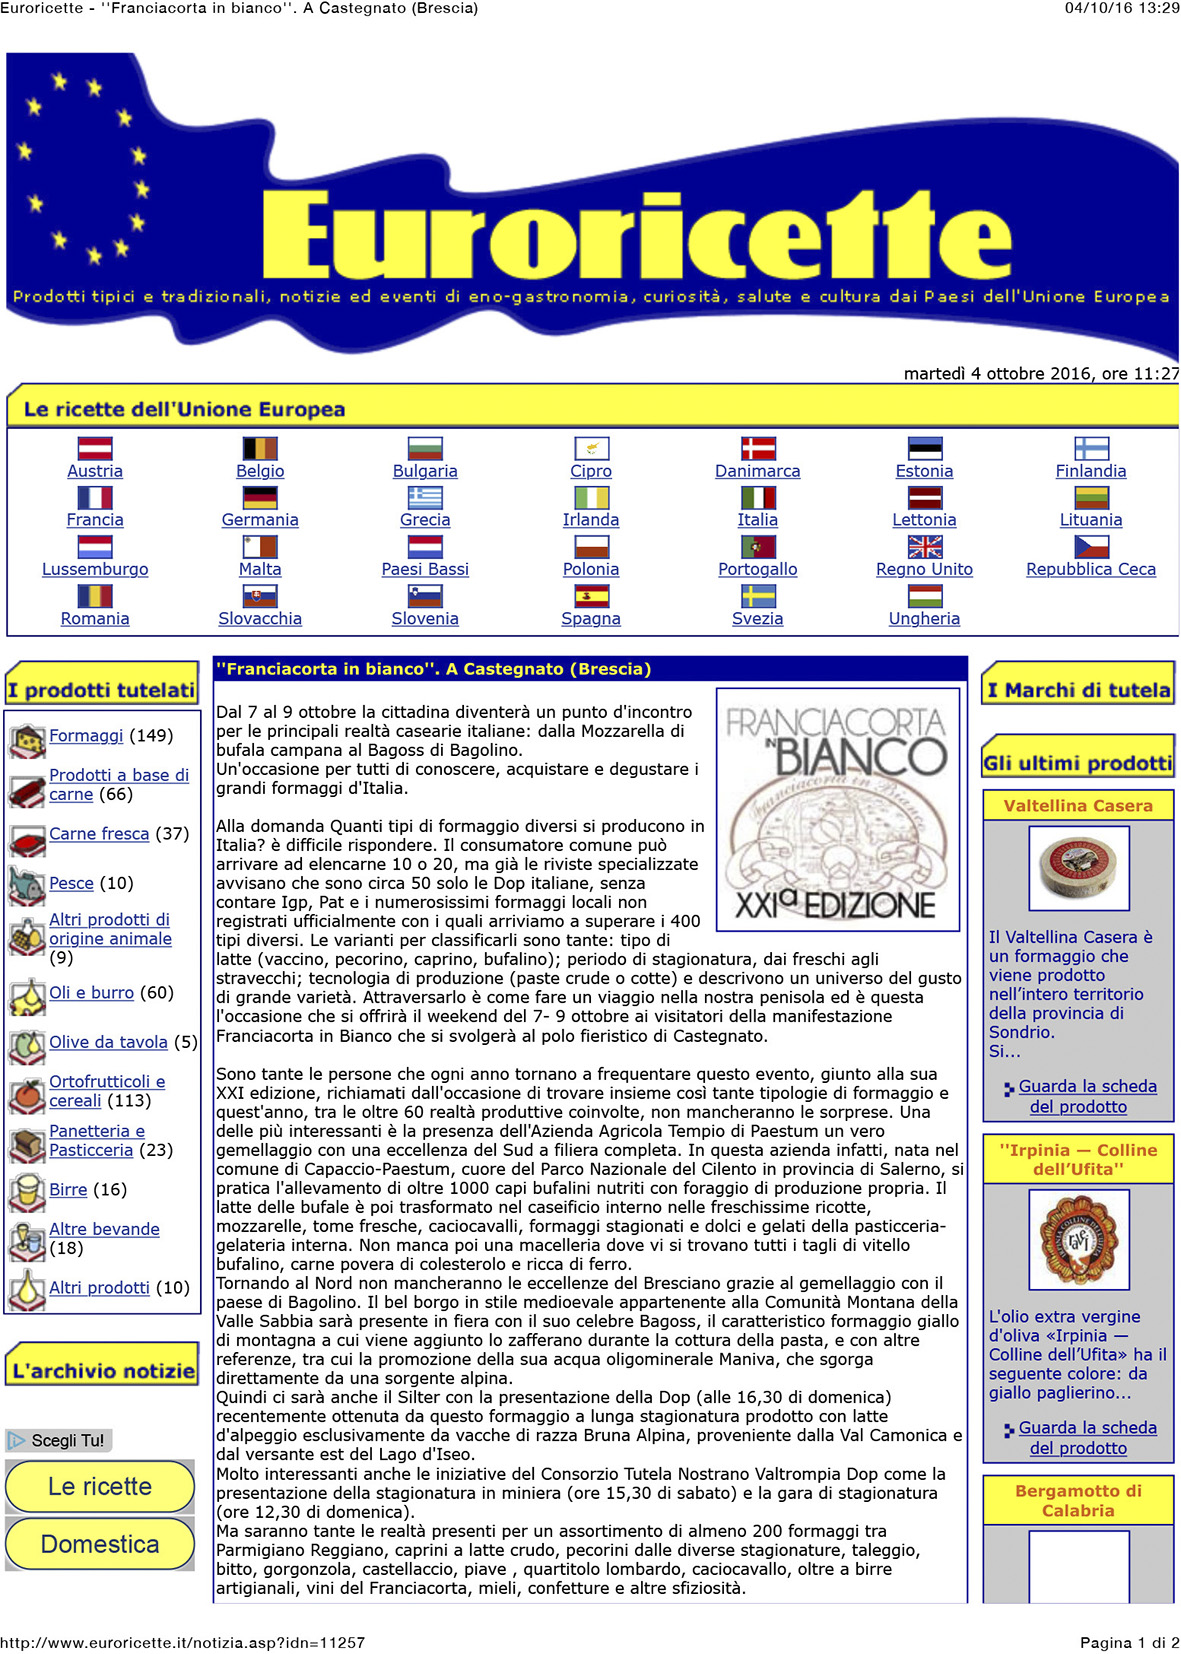 web 20161004 euroricette 1